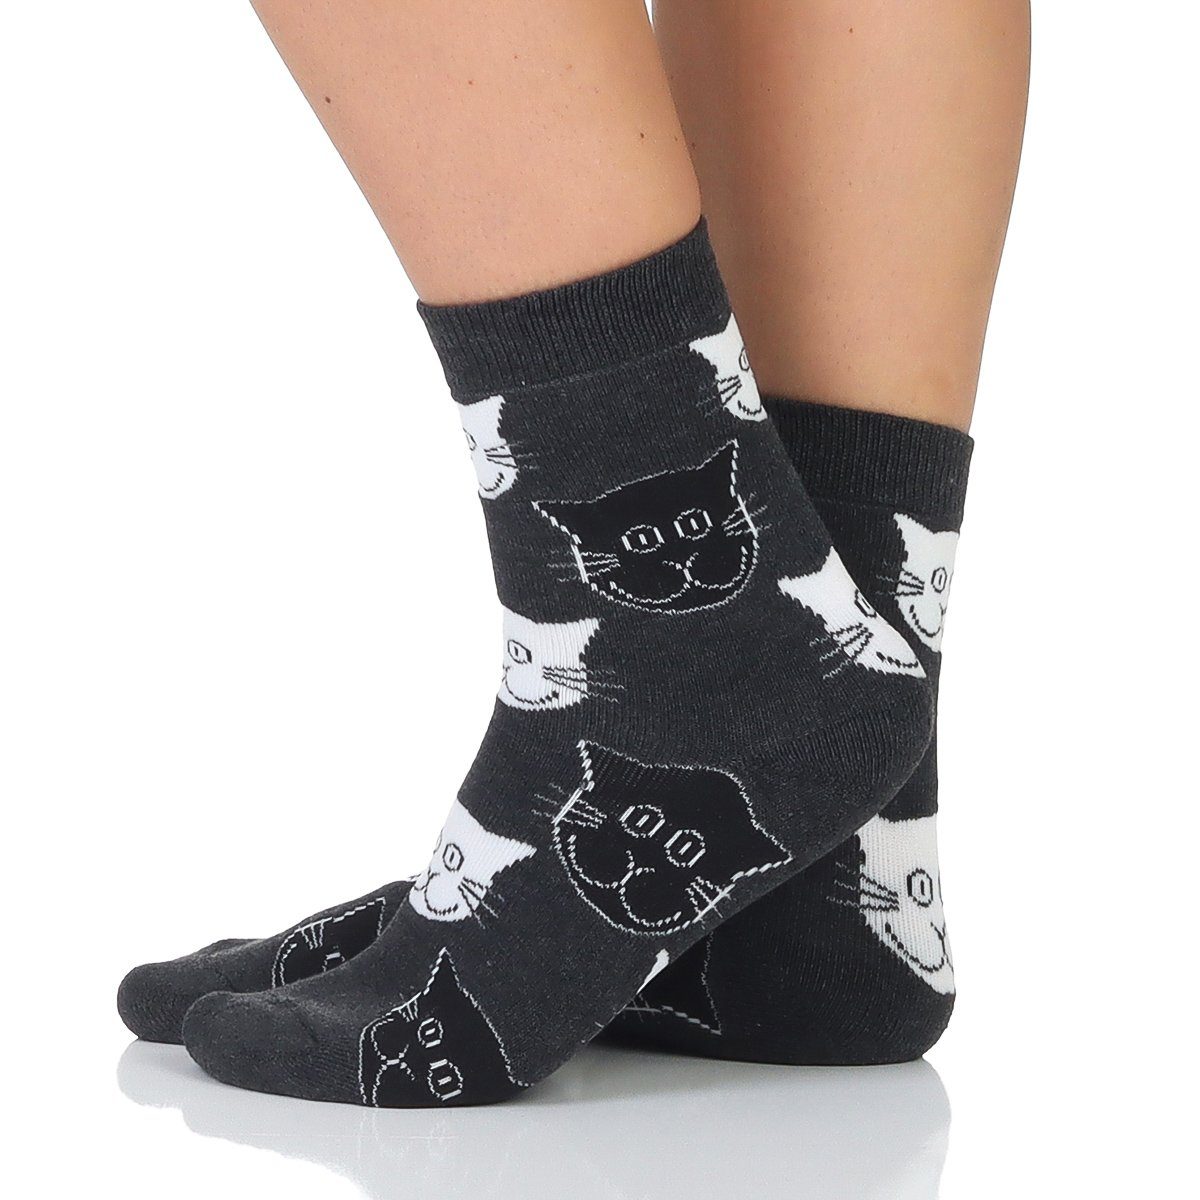 Sockenhimmel Thermosocken Damen Wintersocken Katzen Design warme Socken & Strümpfe (6er Pack) 2fädig Vollfrotteefuß